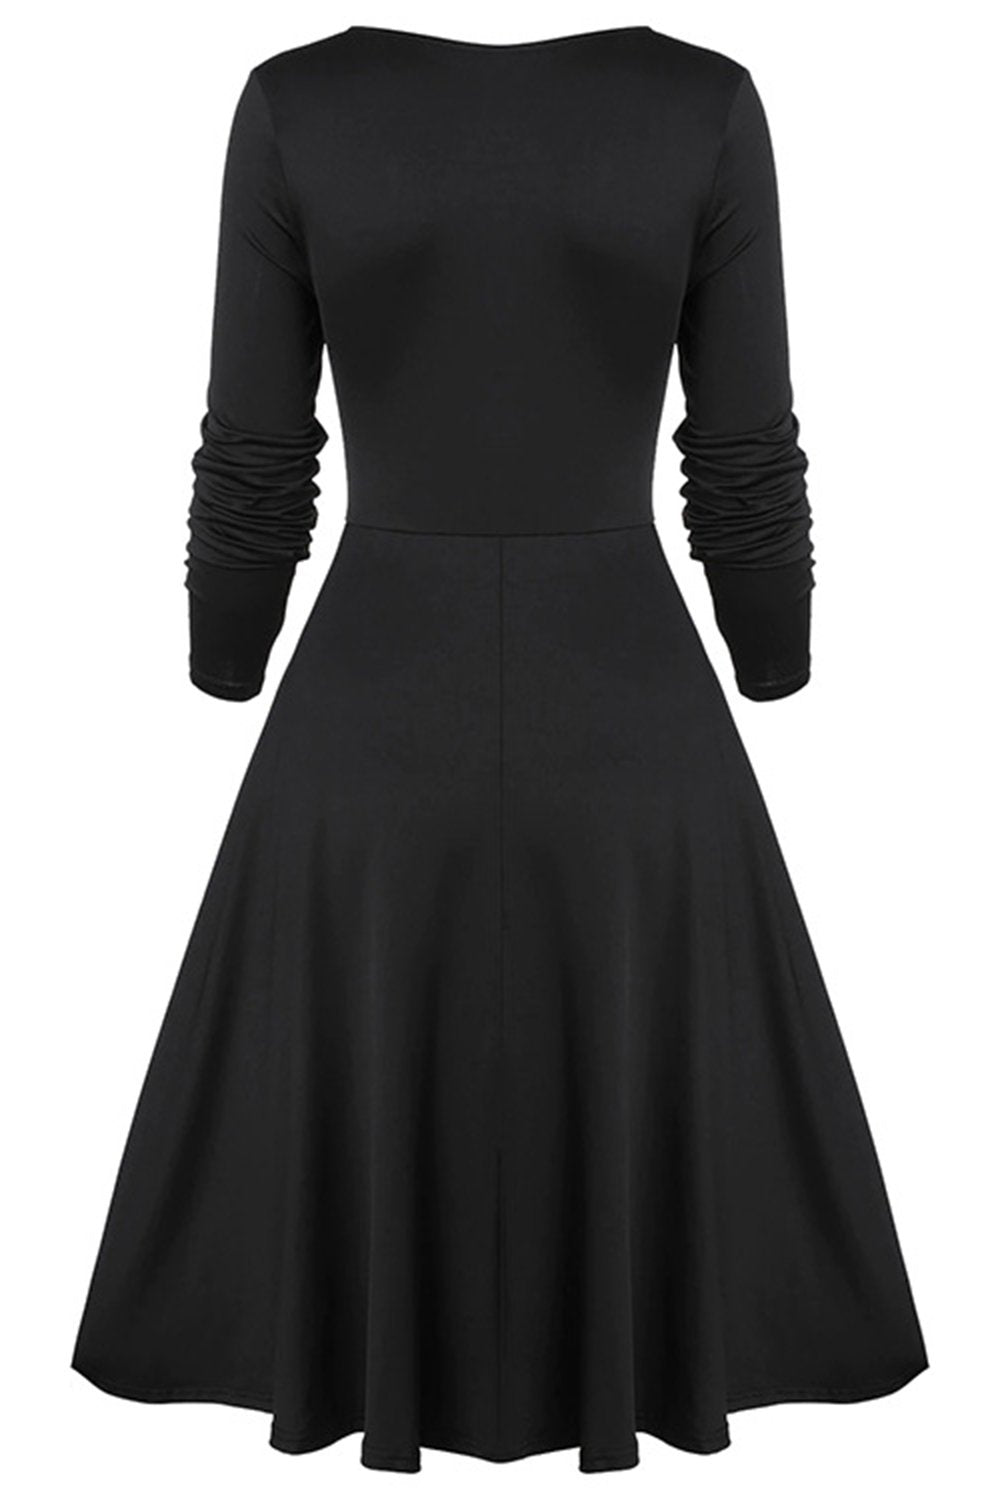 Black and Burgundy Vintage Halloween Dress,DS1544